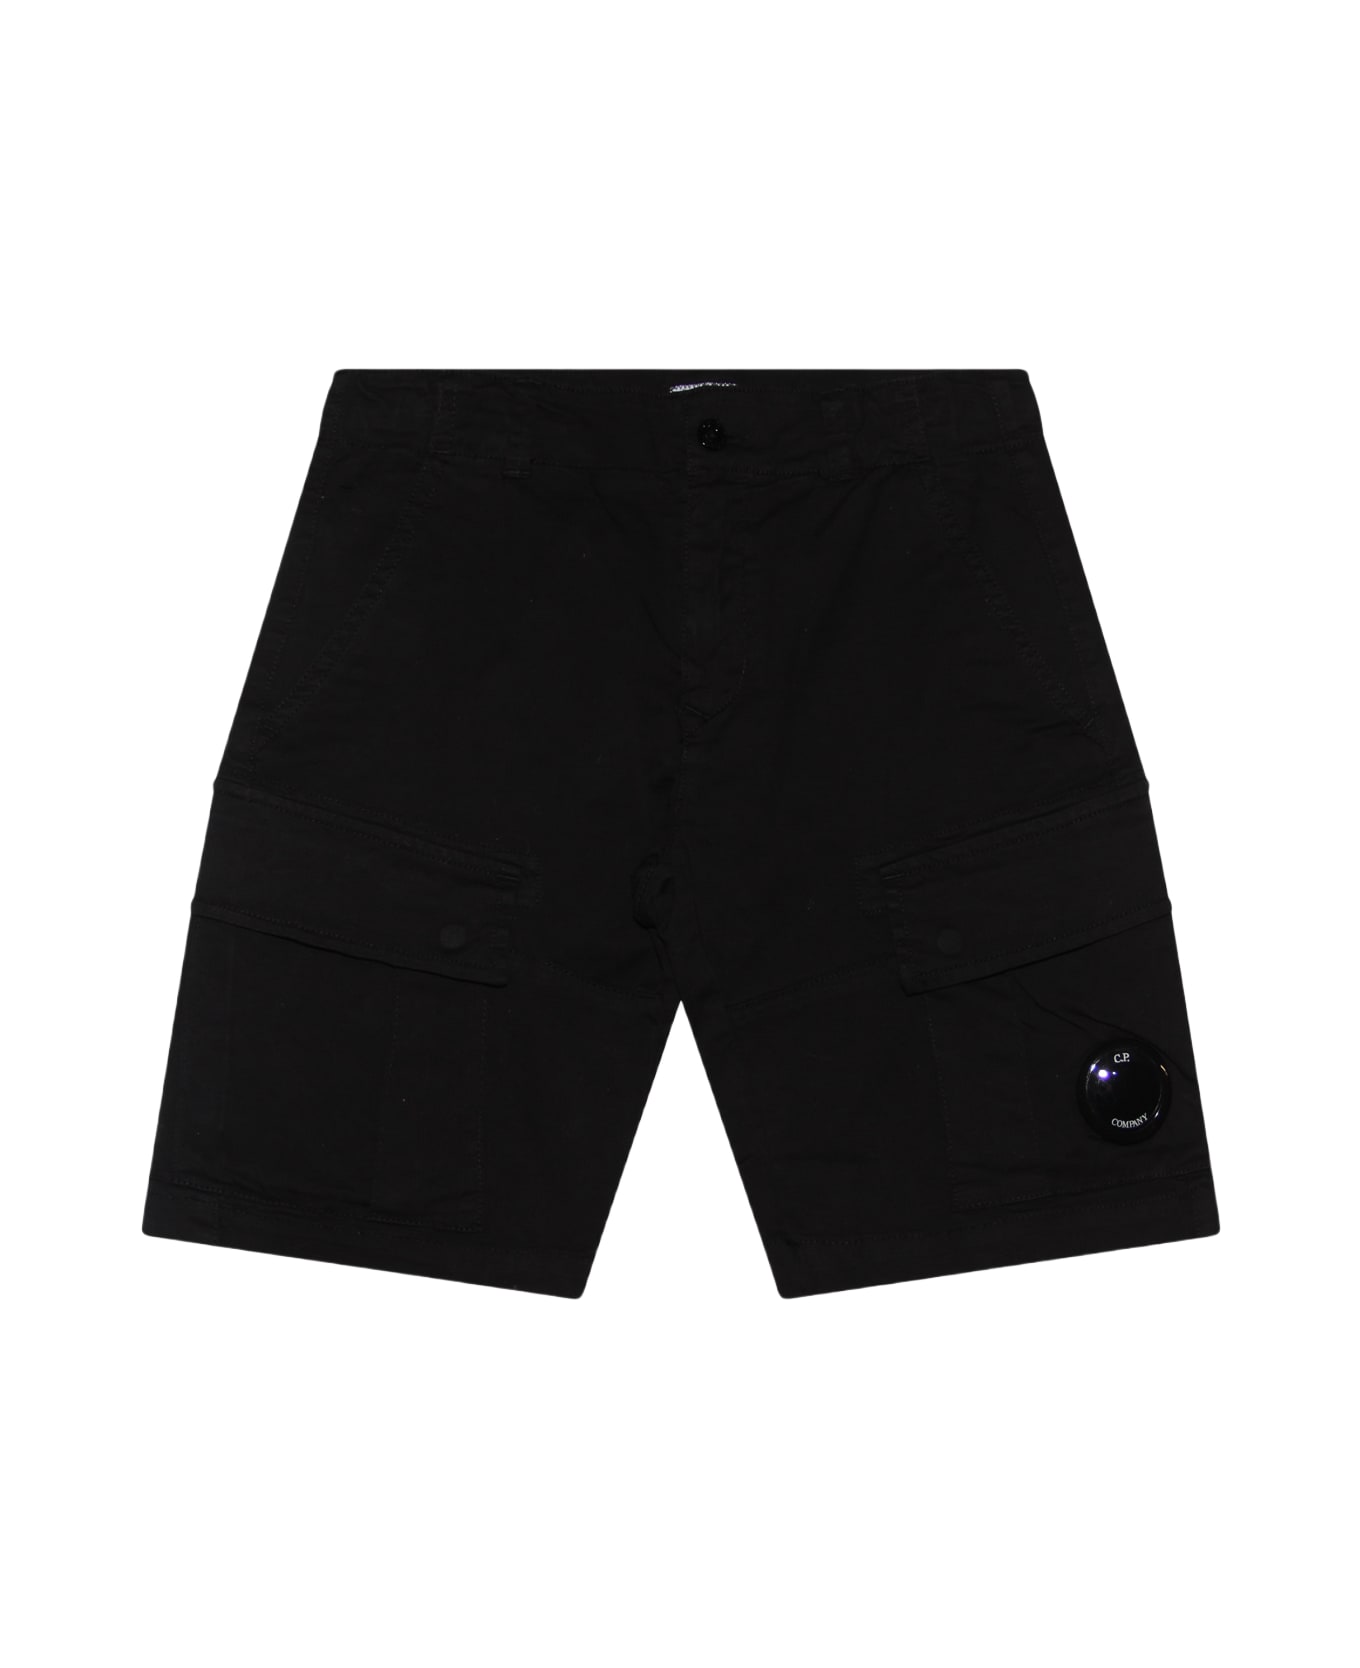 C.P. Company Black Cotton Shorts - NERO/BLACK